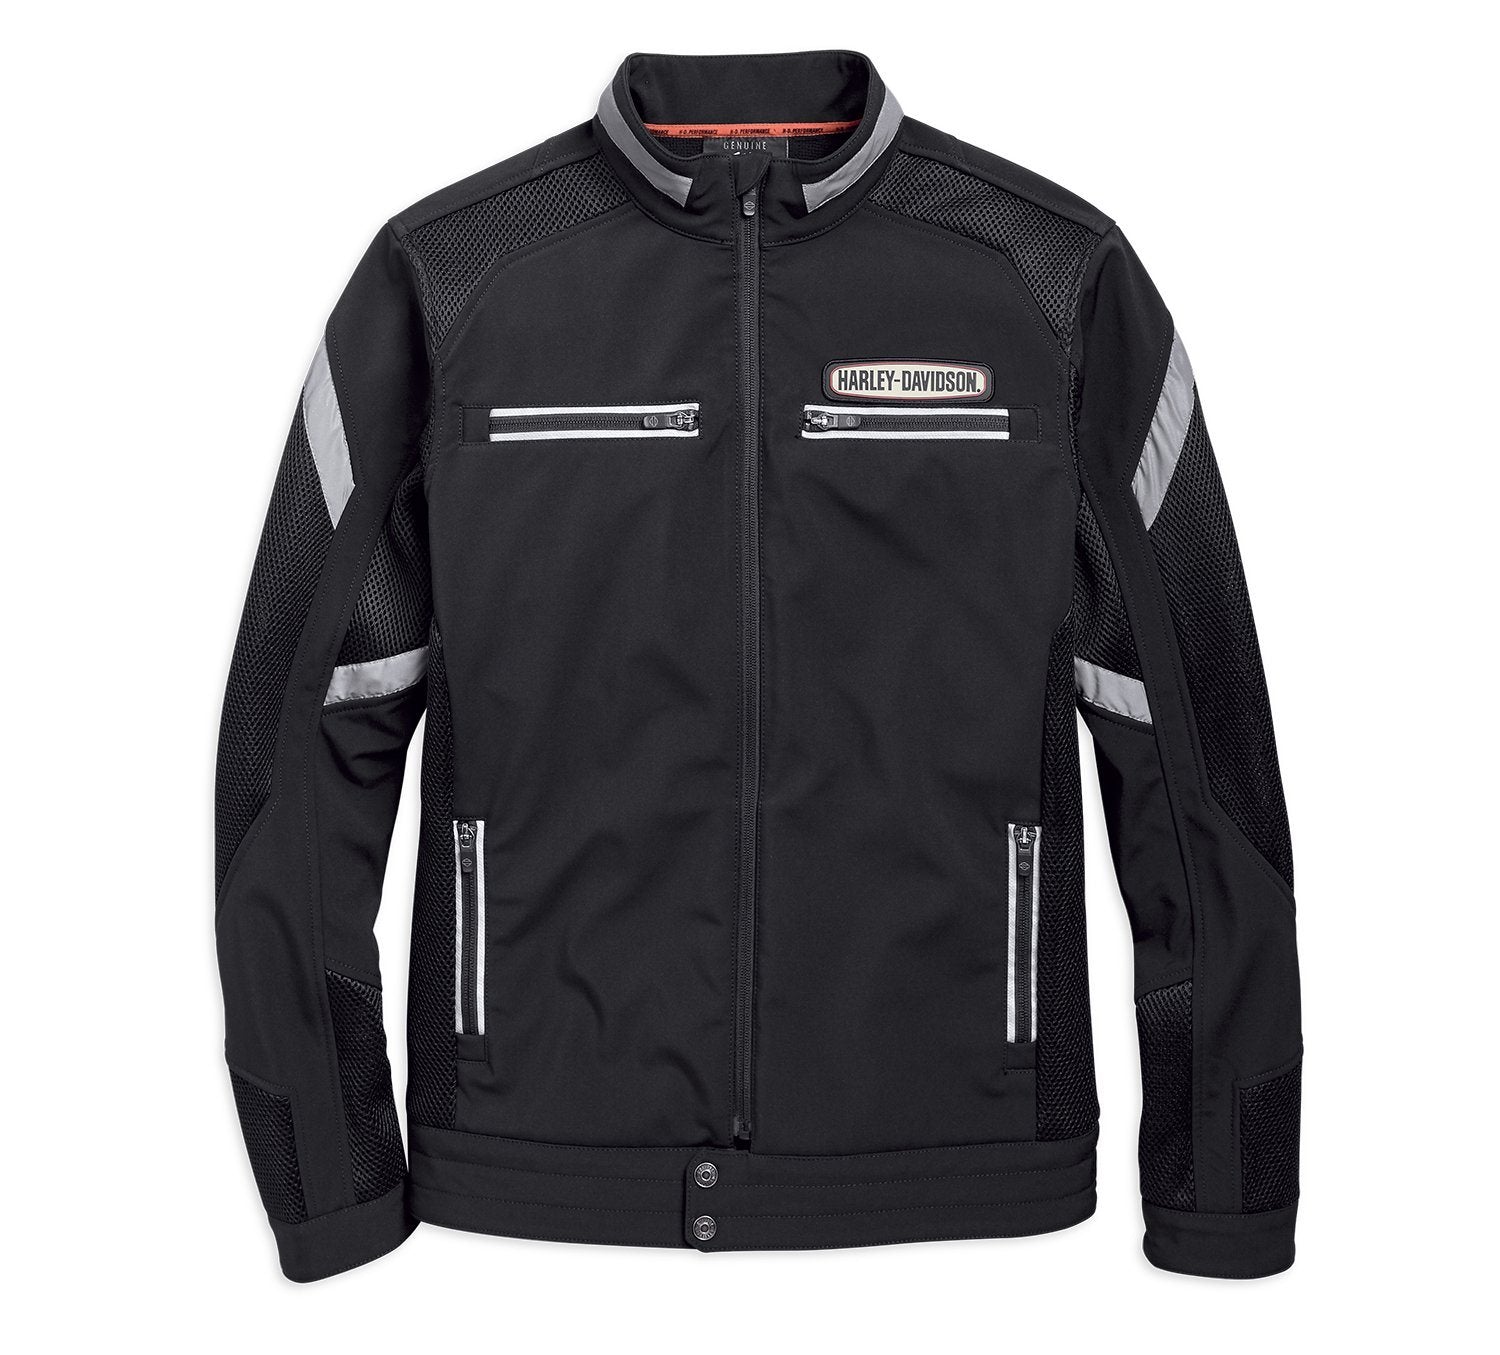 Harley-Davidson Men's Performance Soft Shell & Mesh Jacket - 97518-19VM